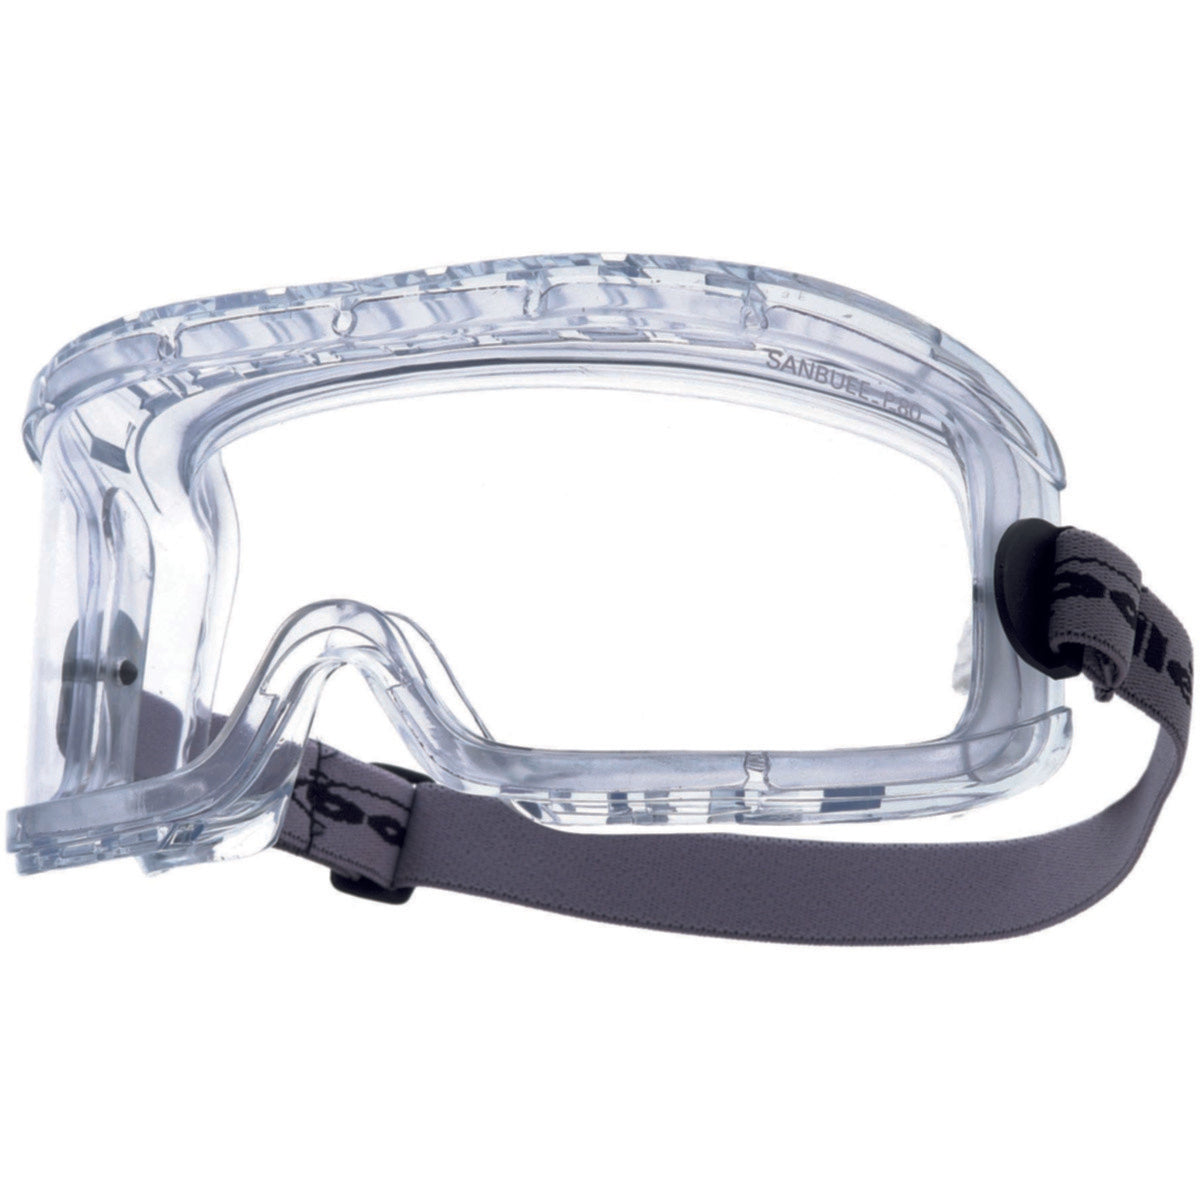 Bollé Safety Elite Safety Goggles